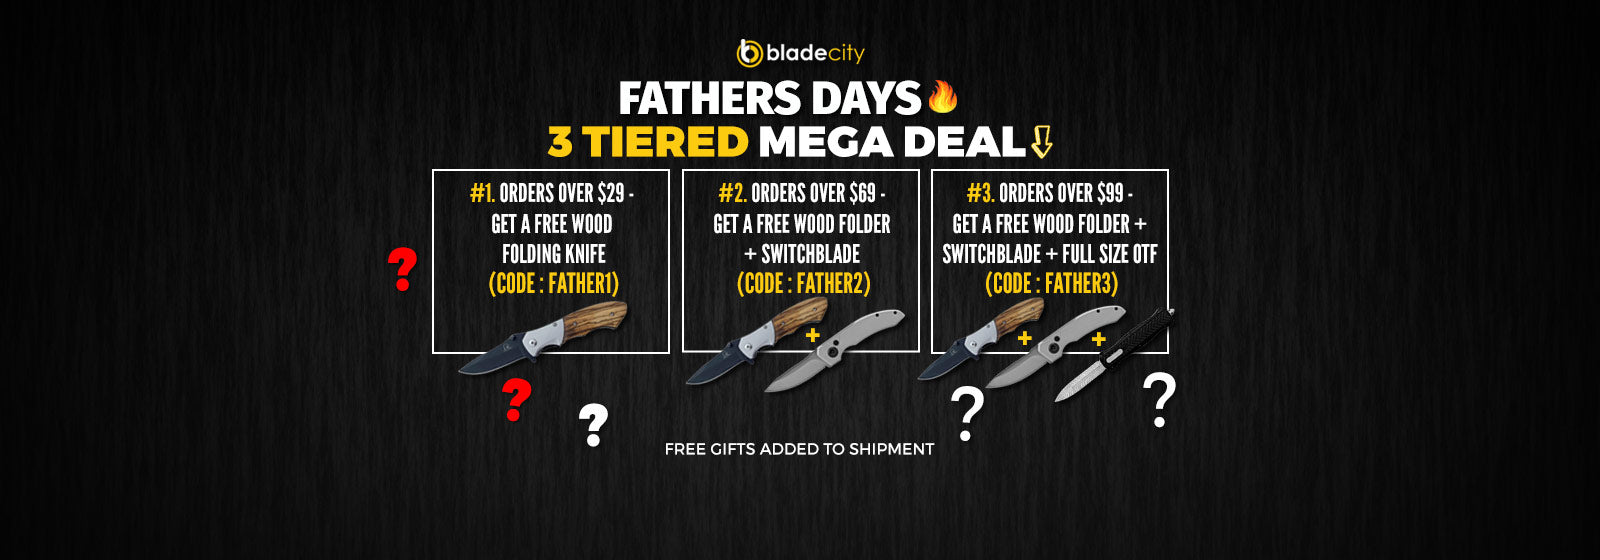 buy knives at blade-city.com